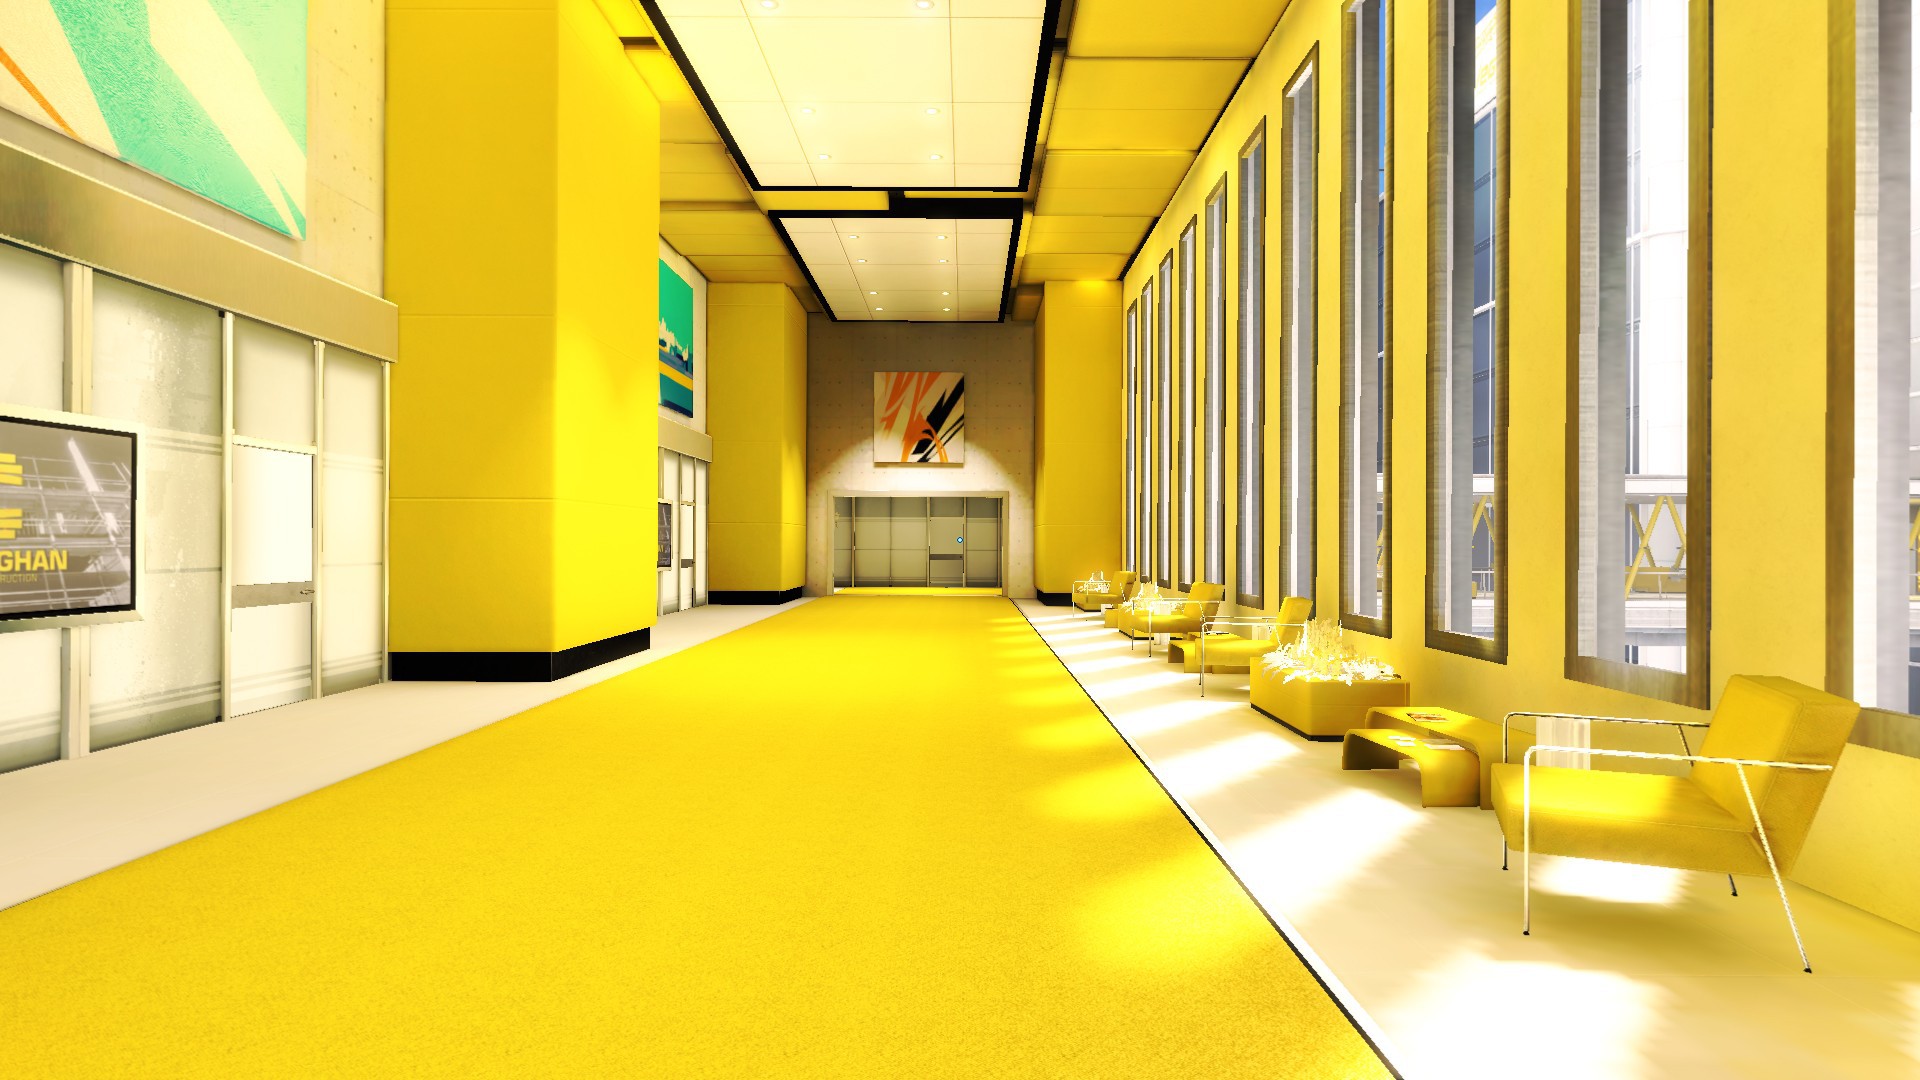 Zastaki.com - Интерьер галереи в желтом цвете